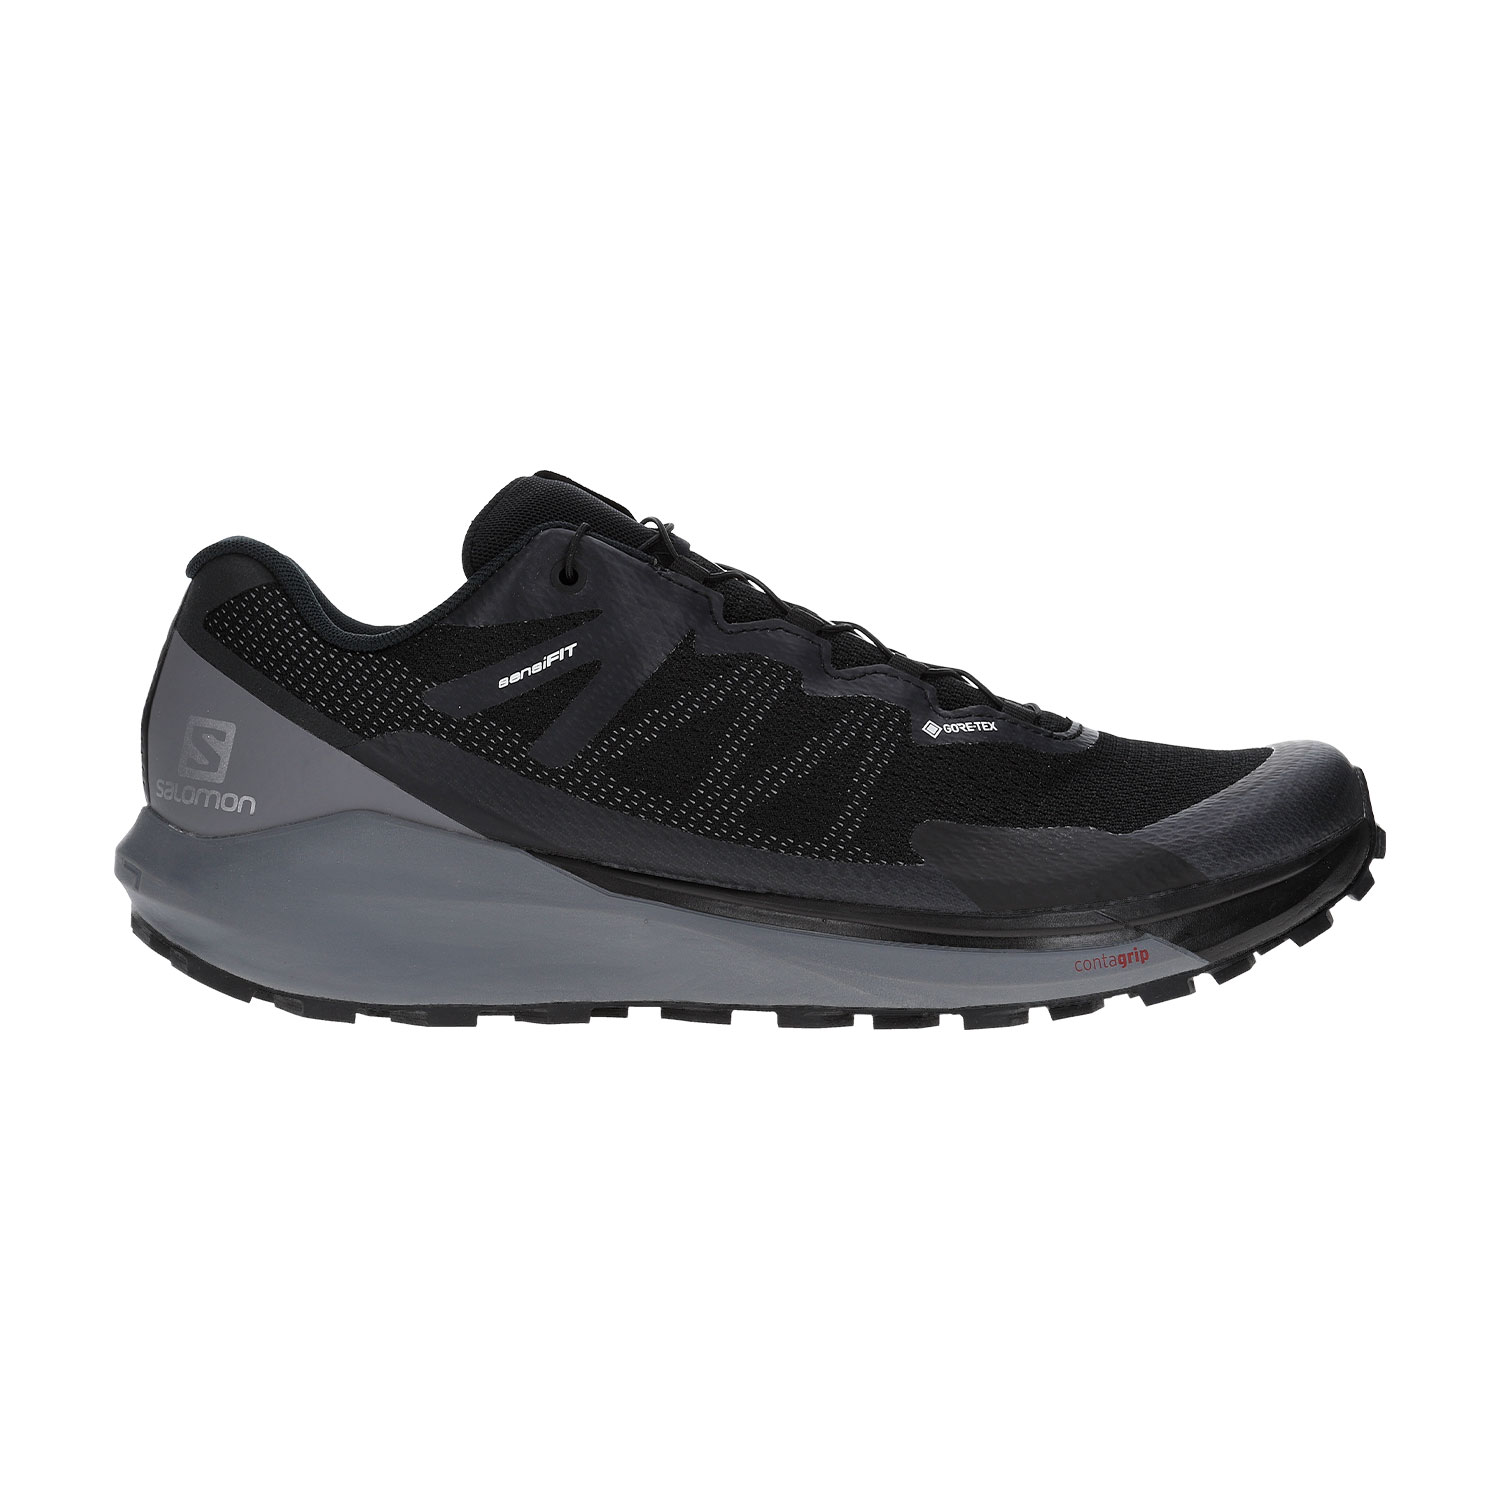 Salomon Sense Ride 3 GTX Men's Trail Running Shoes - Black